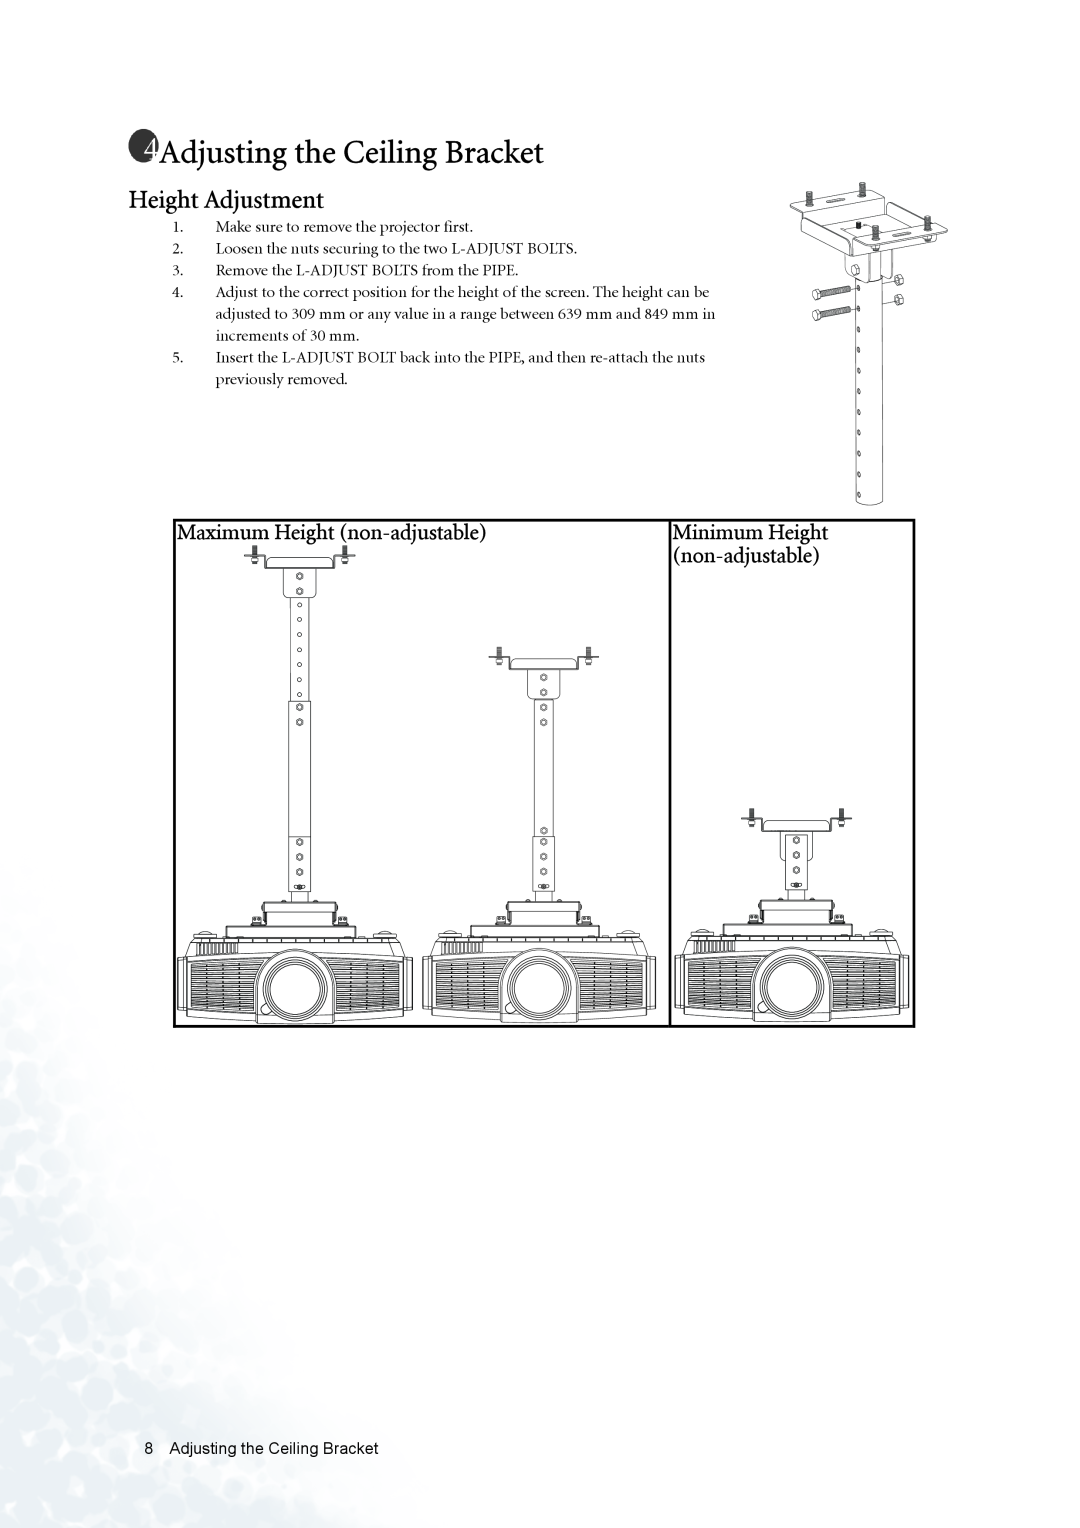 BenQ PE8720 manual Adjusting the Ceiling Bracket, Height Adjustment, Maximum Height non-adjustable, Minimum Height 